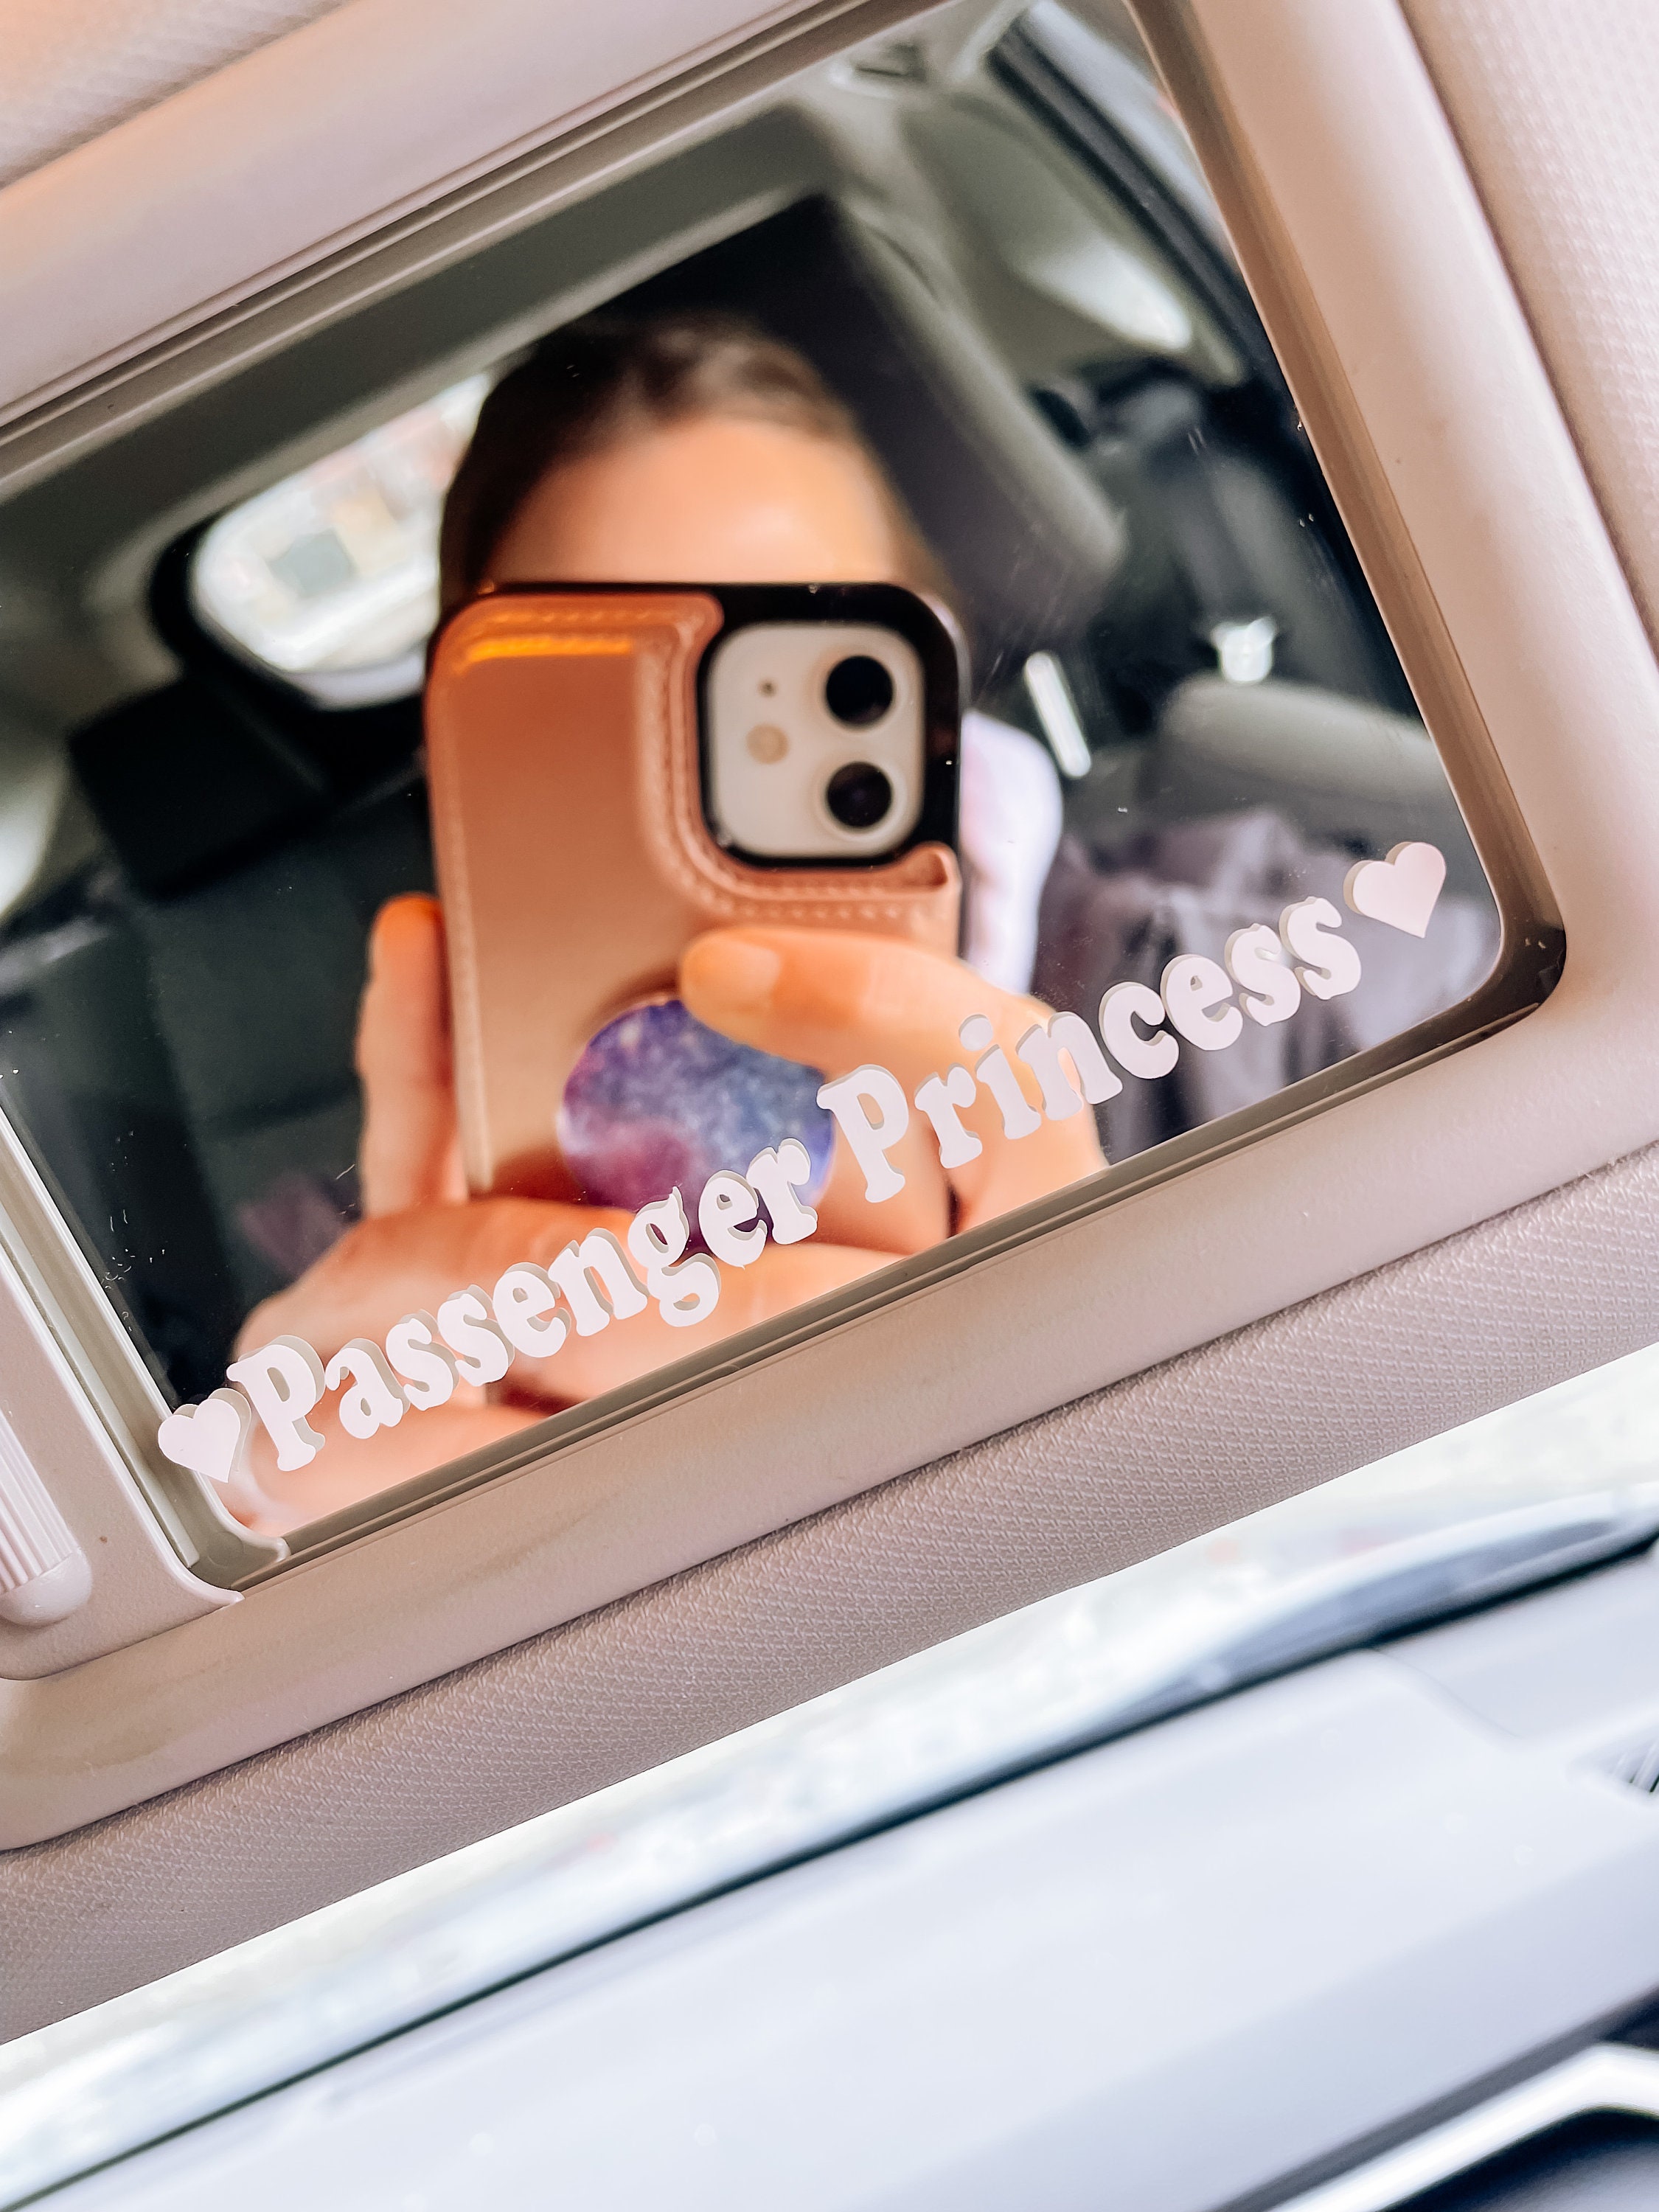 Car Mirror Stickers Passenger Princess Vinyl Decal Be Drive Safe Kind Rear  V9C5 